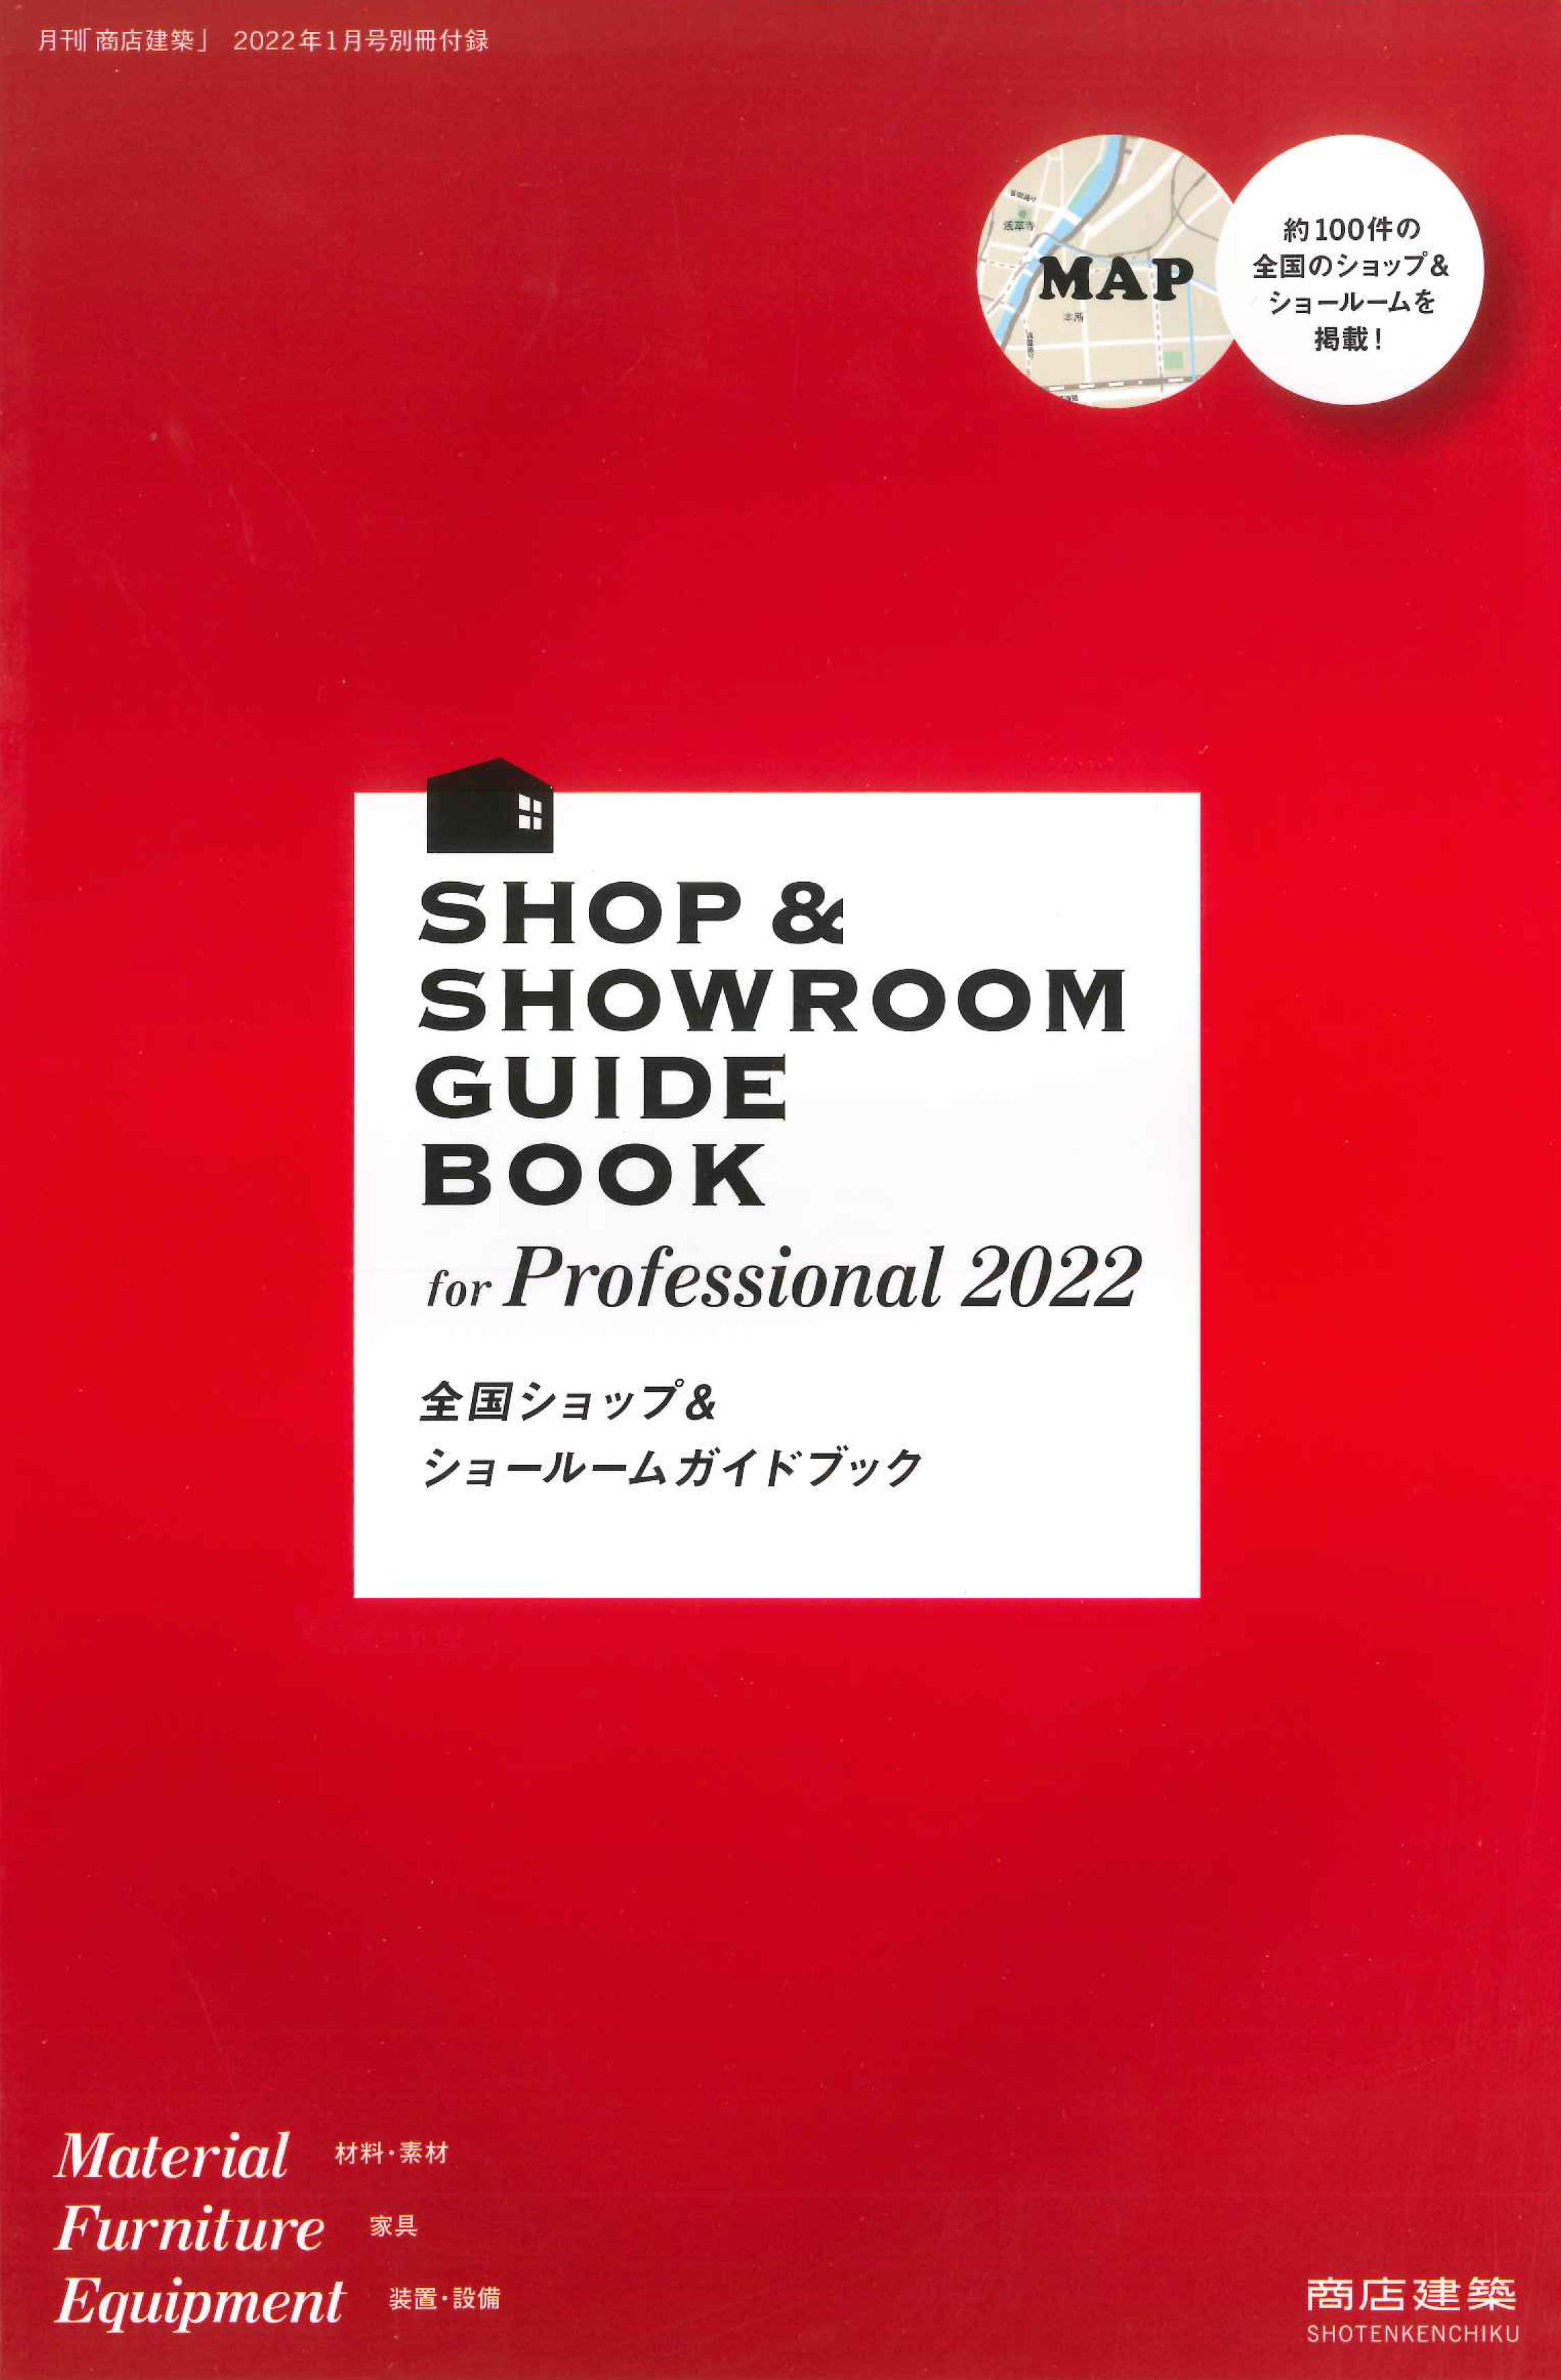 SHOP & SHOWROOM GUIDE BOOK